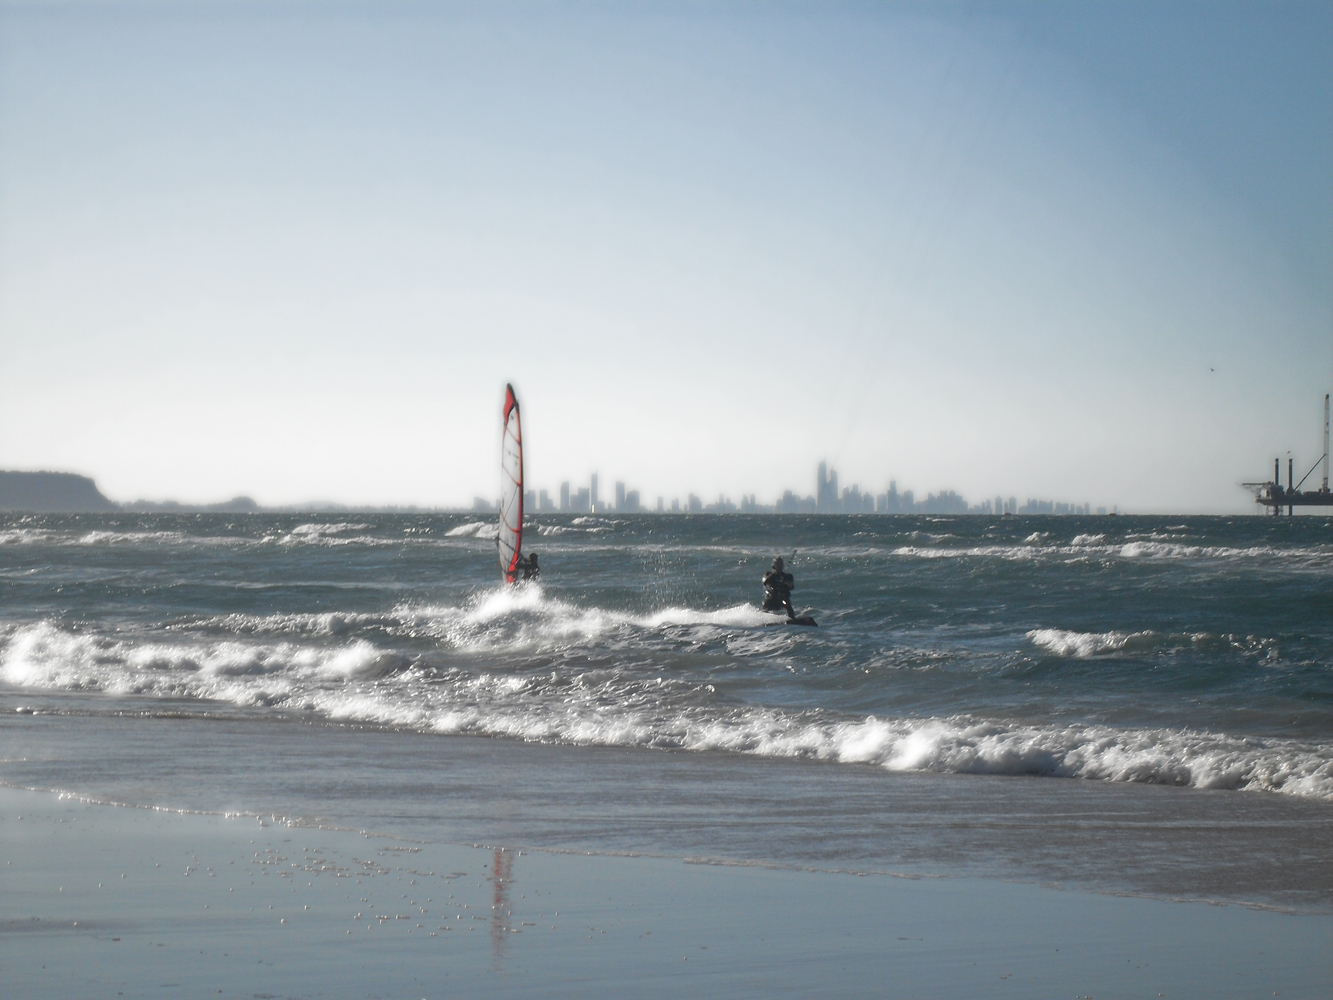 Windsurfer and kitesurfer photo